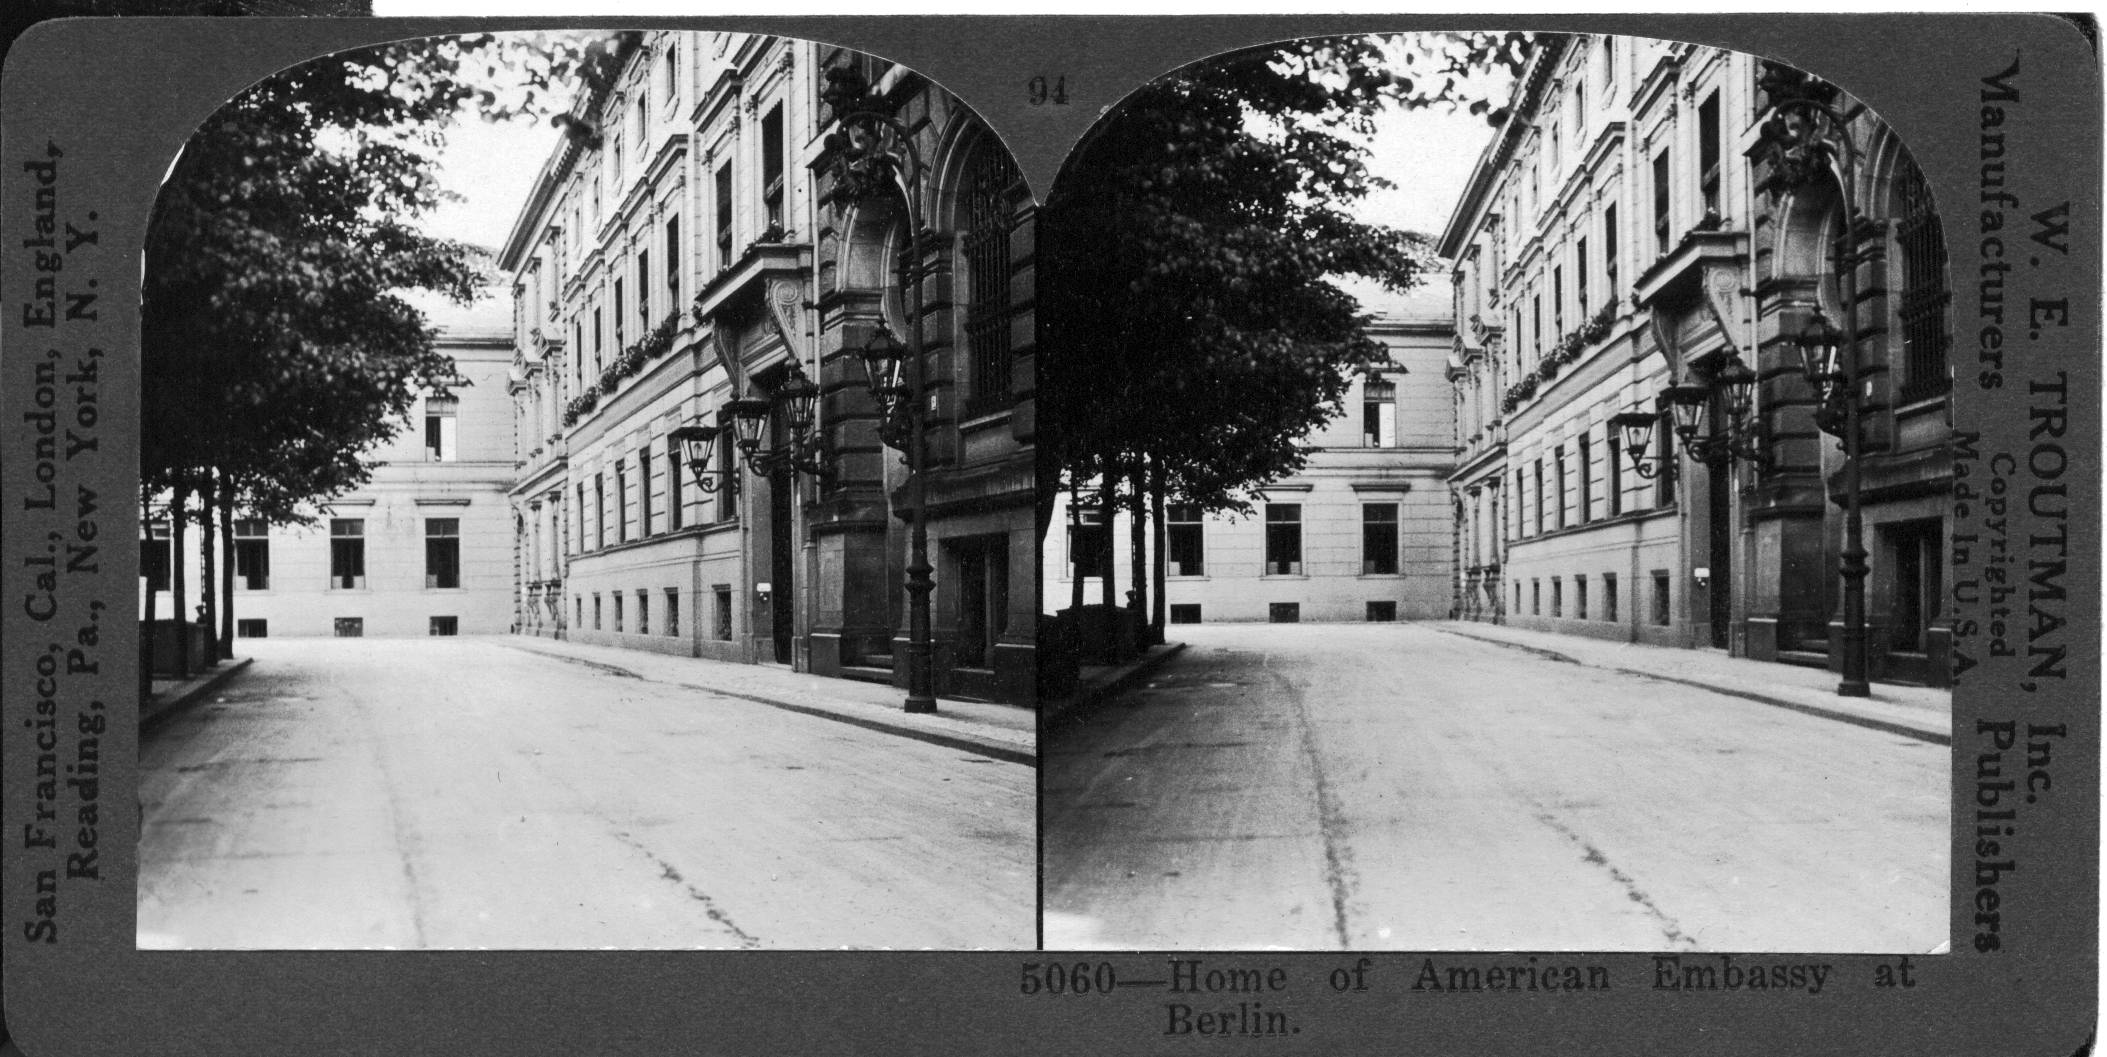 Home of American Embassy at Berlin